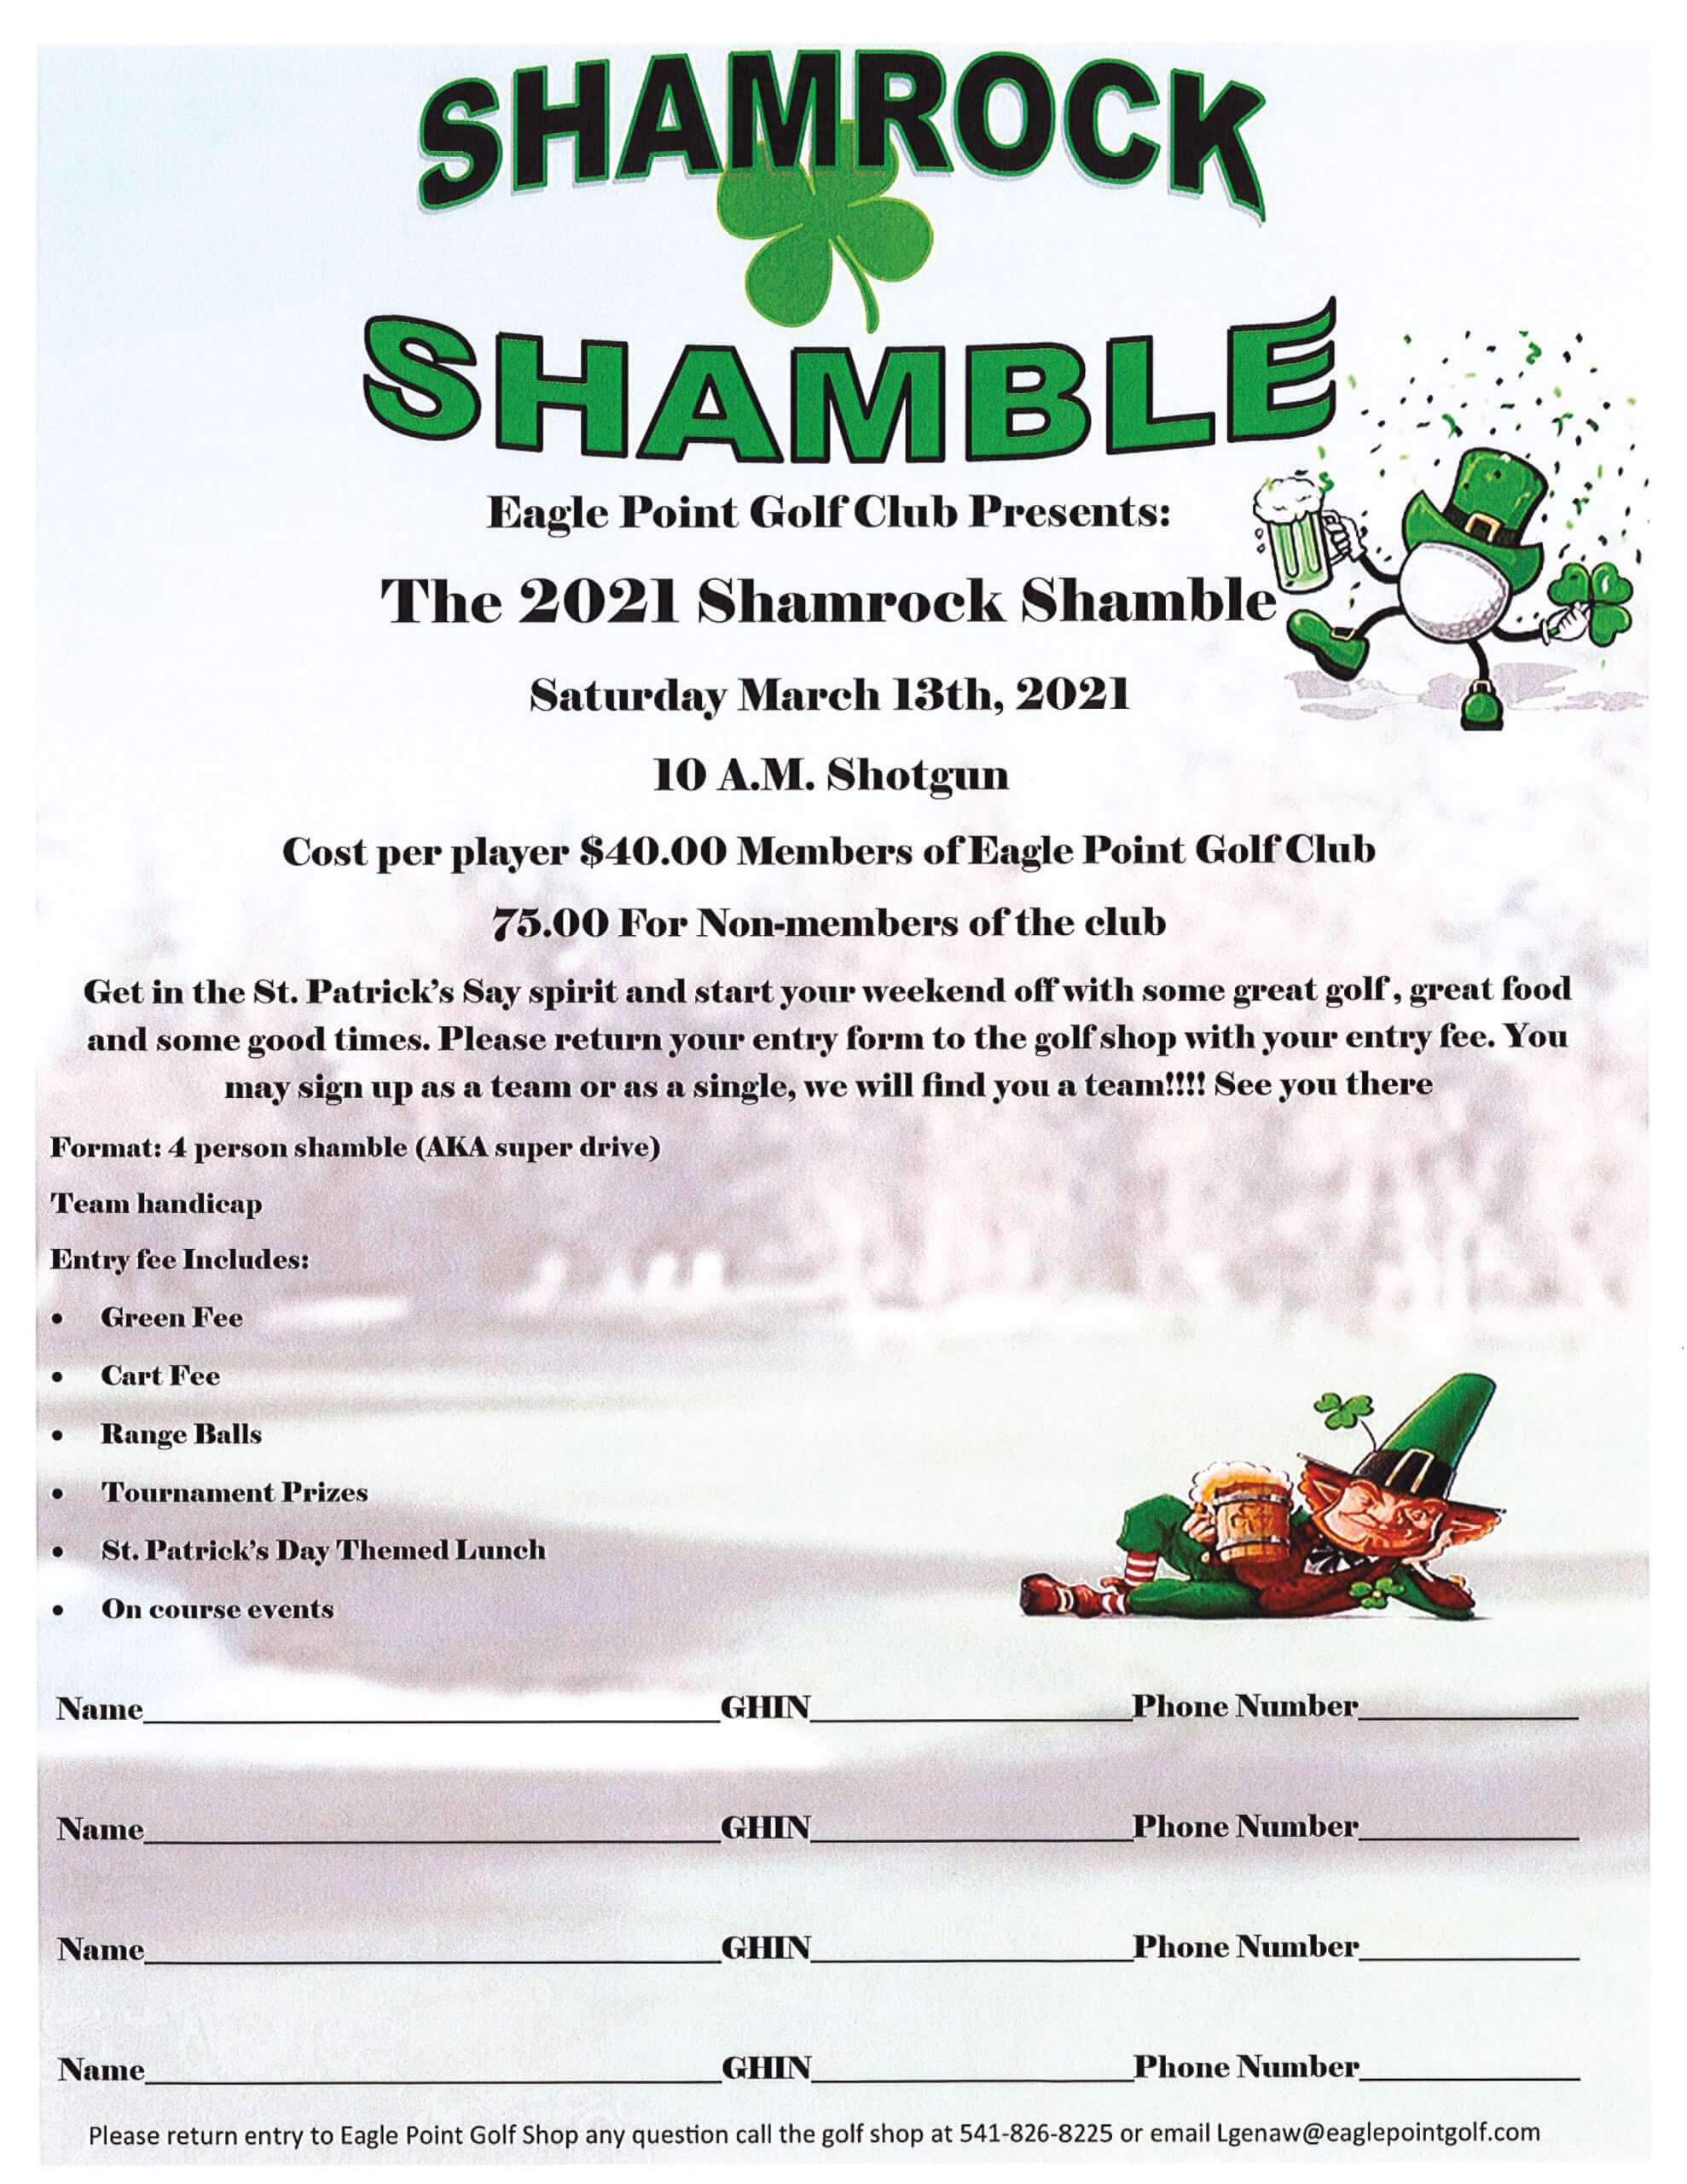 Shamrock Shamble Tournament The Resort at Eagle Point